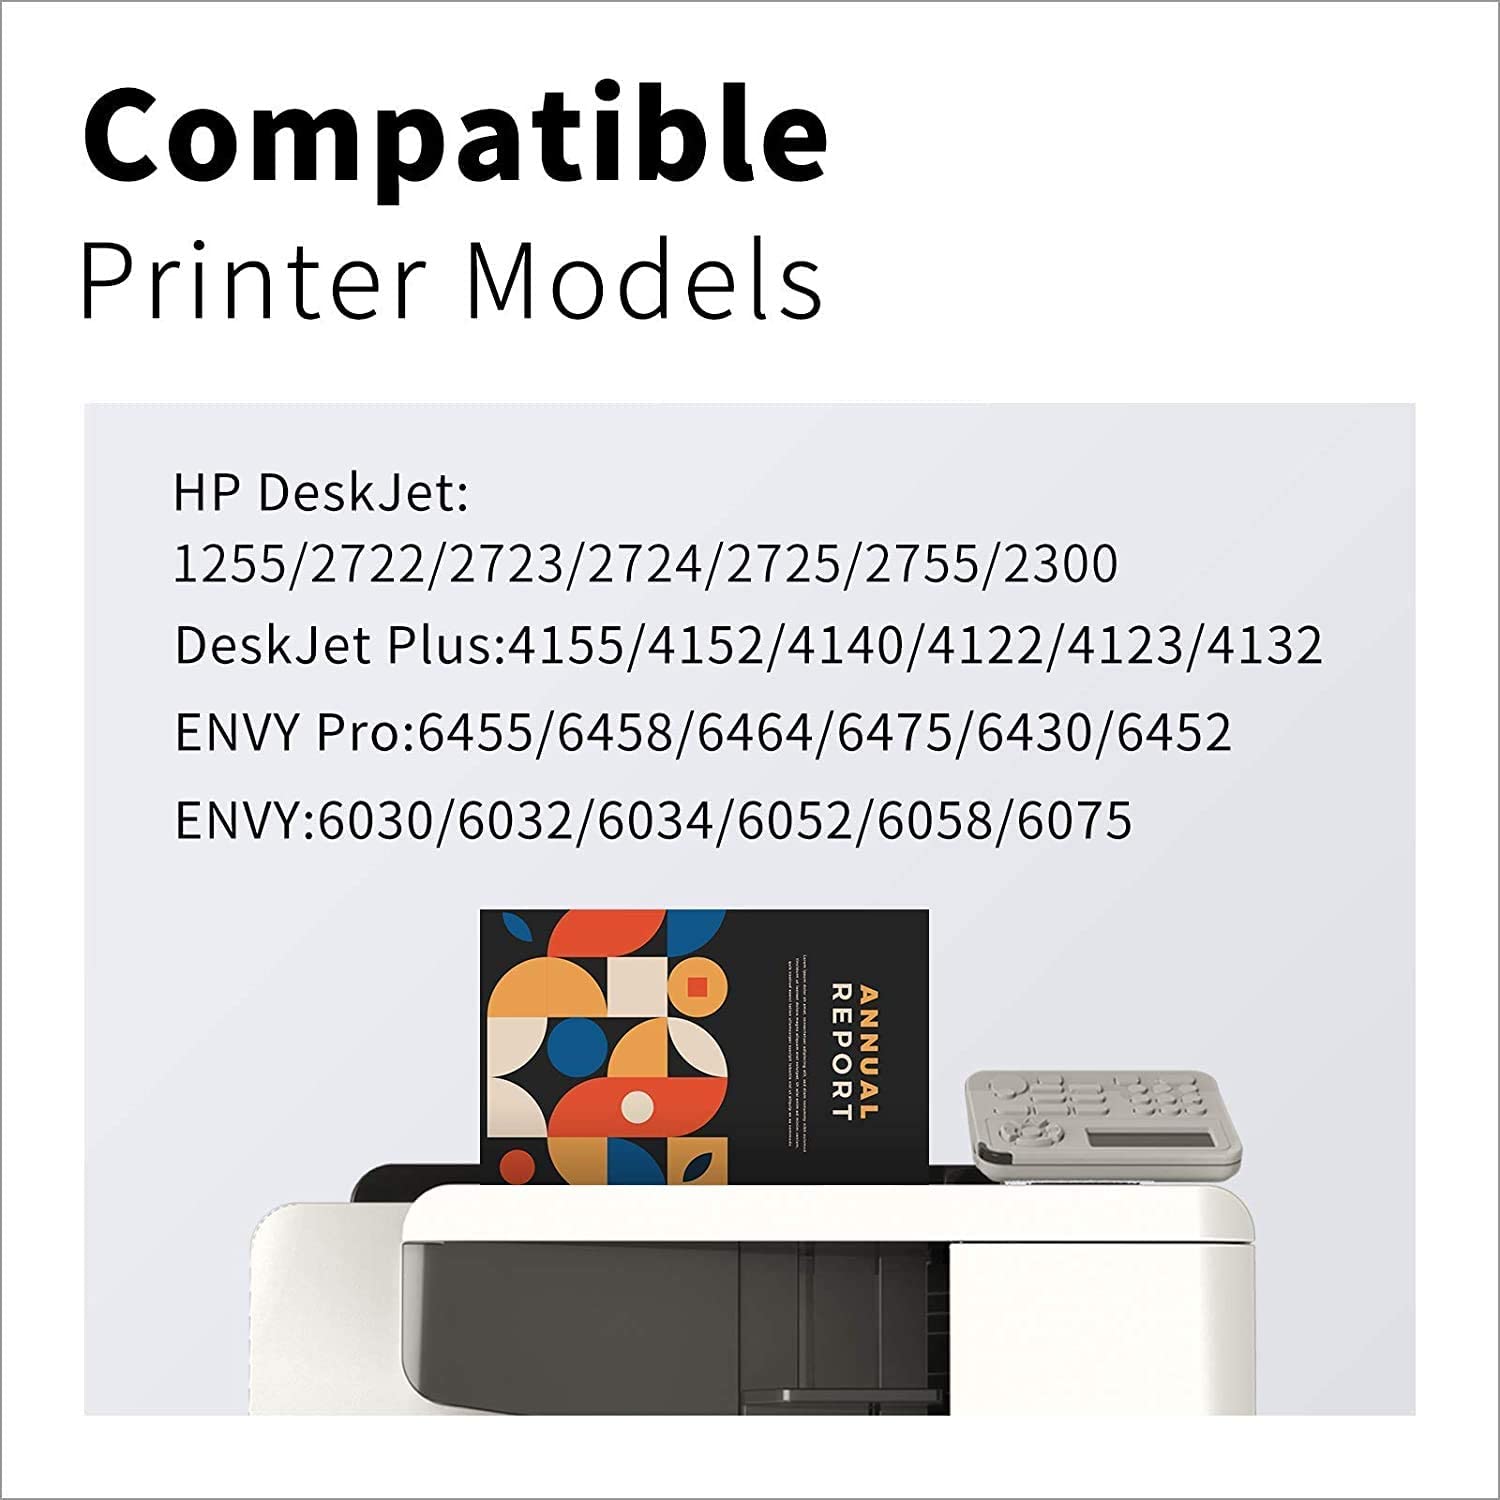 compatible printer models for HP 67XL Ink Cartridges:List of compatible printer models for HP 67XL ink cartridges including HP DeskJet and ENVY series, ensuring broad device compatibility.